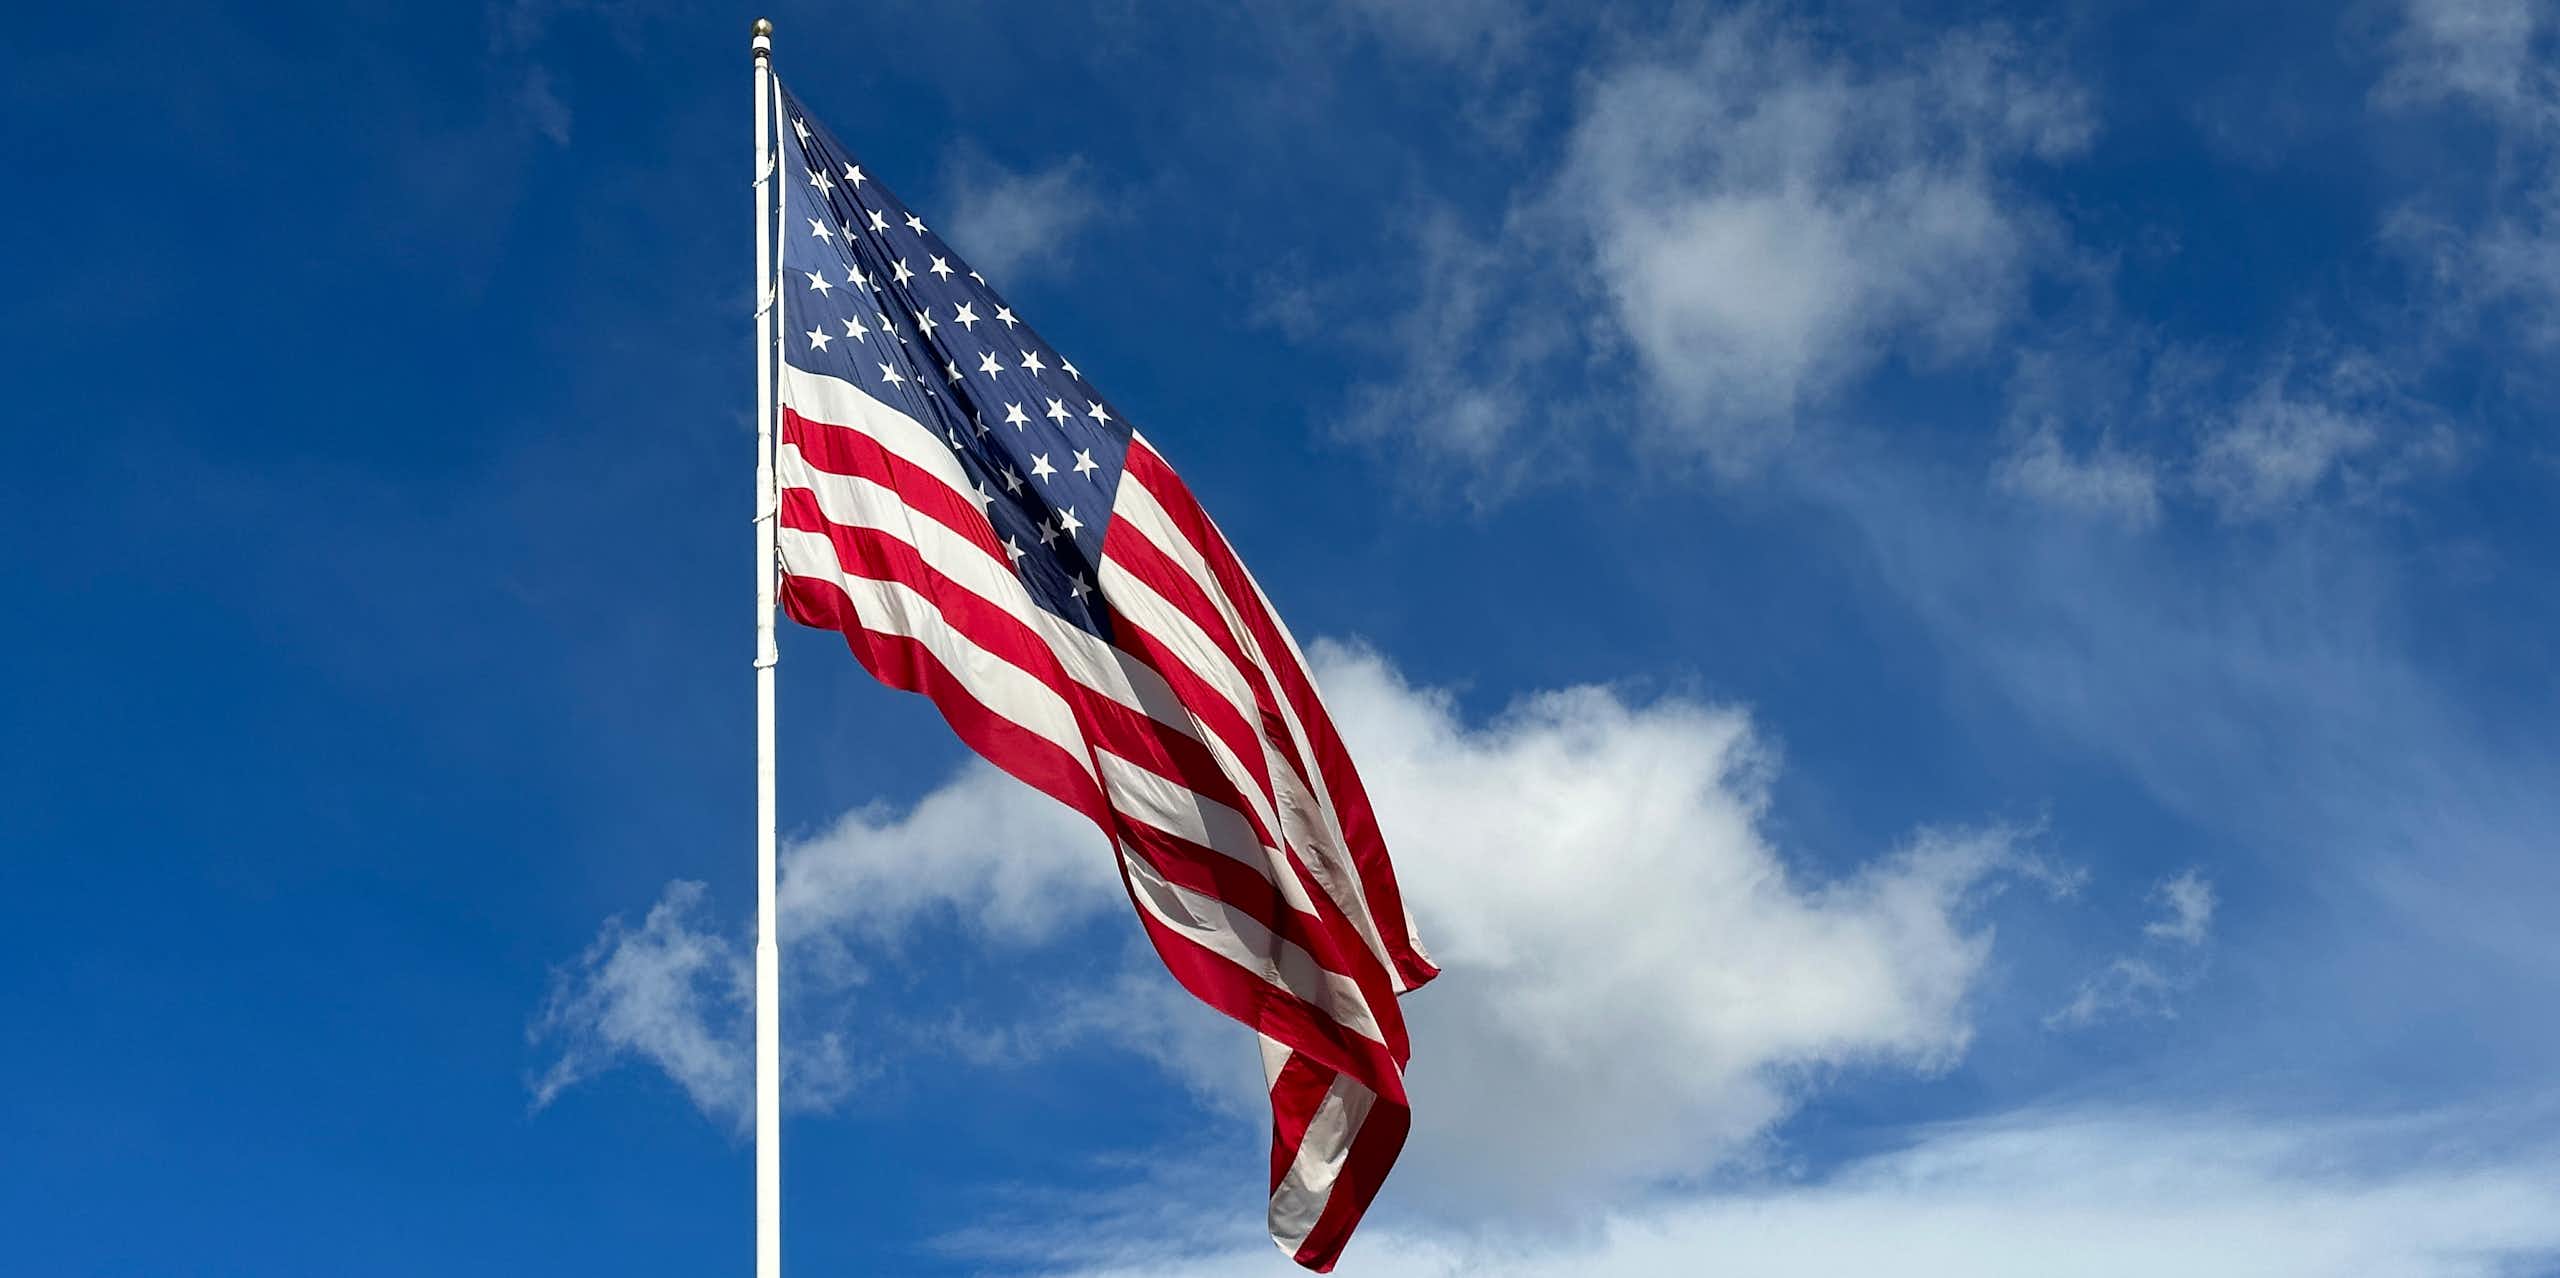 An American flag fluttering against a cloudy sky.